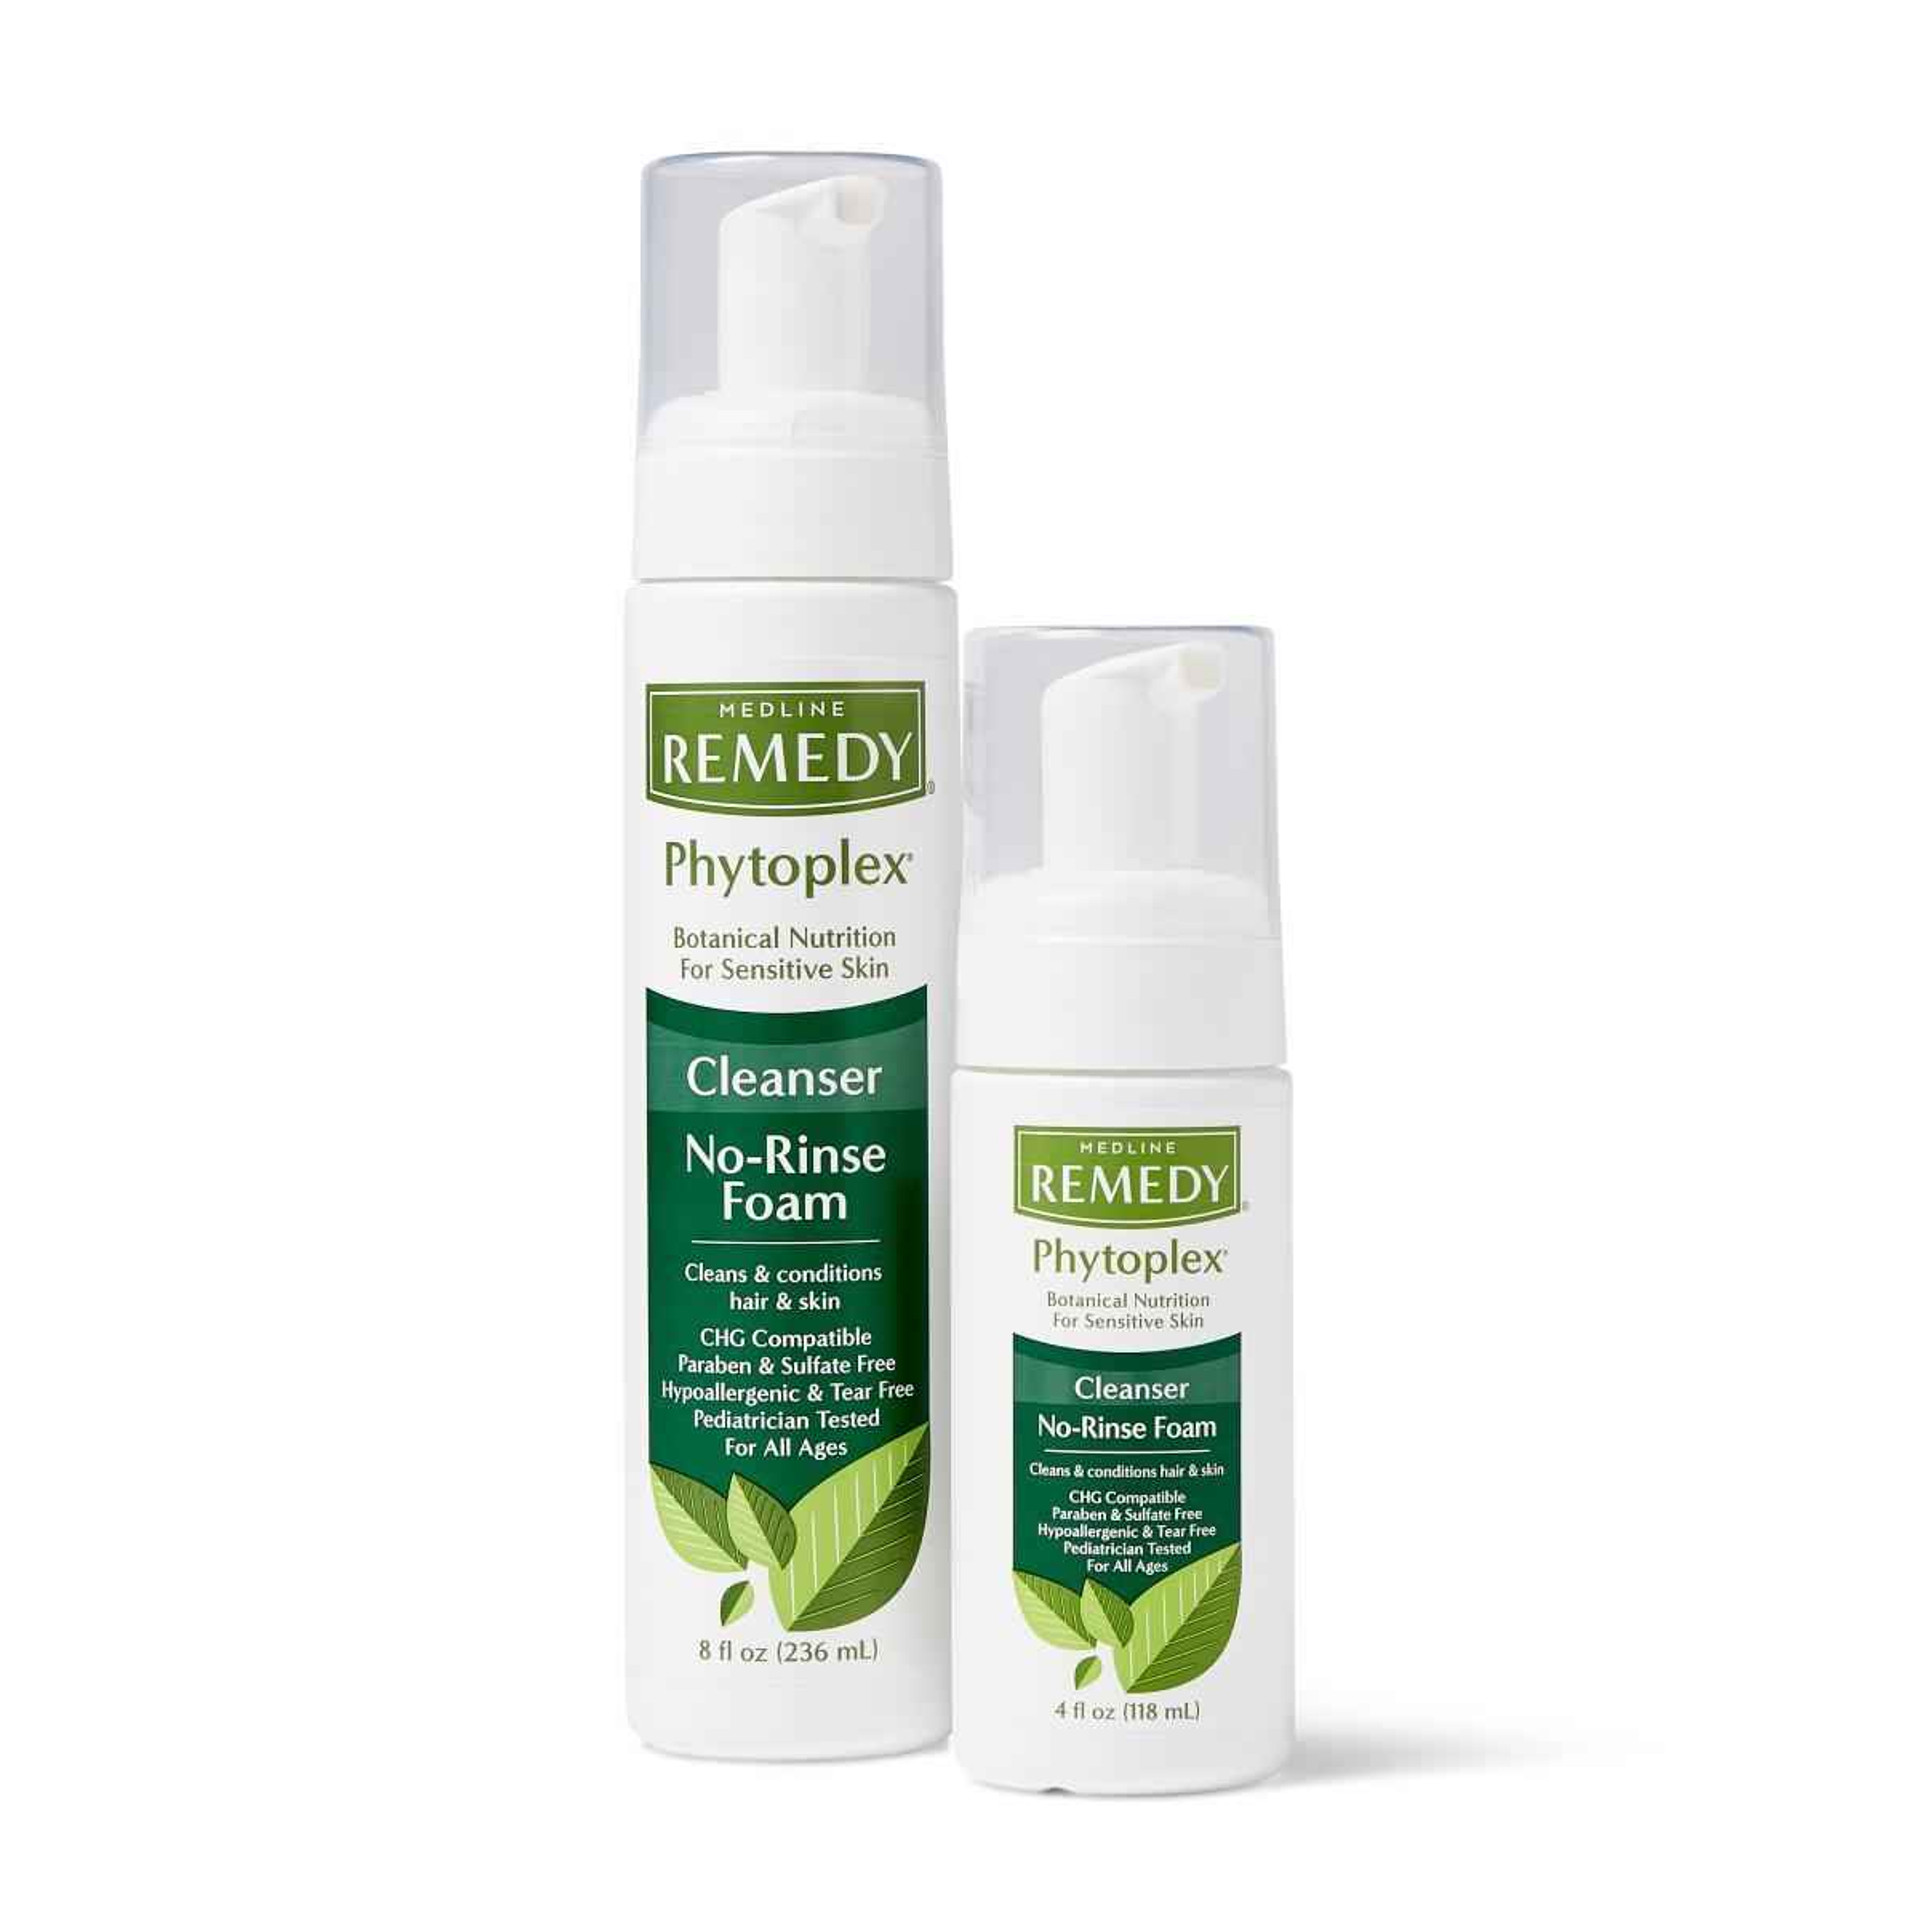 Medline Remedy Phytoplex Cleanser No-Rinse Foam 236 mL